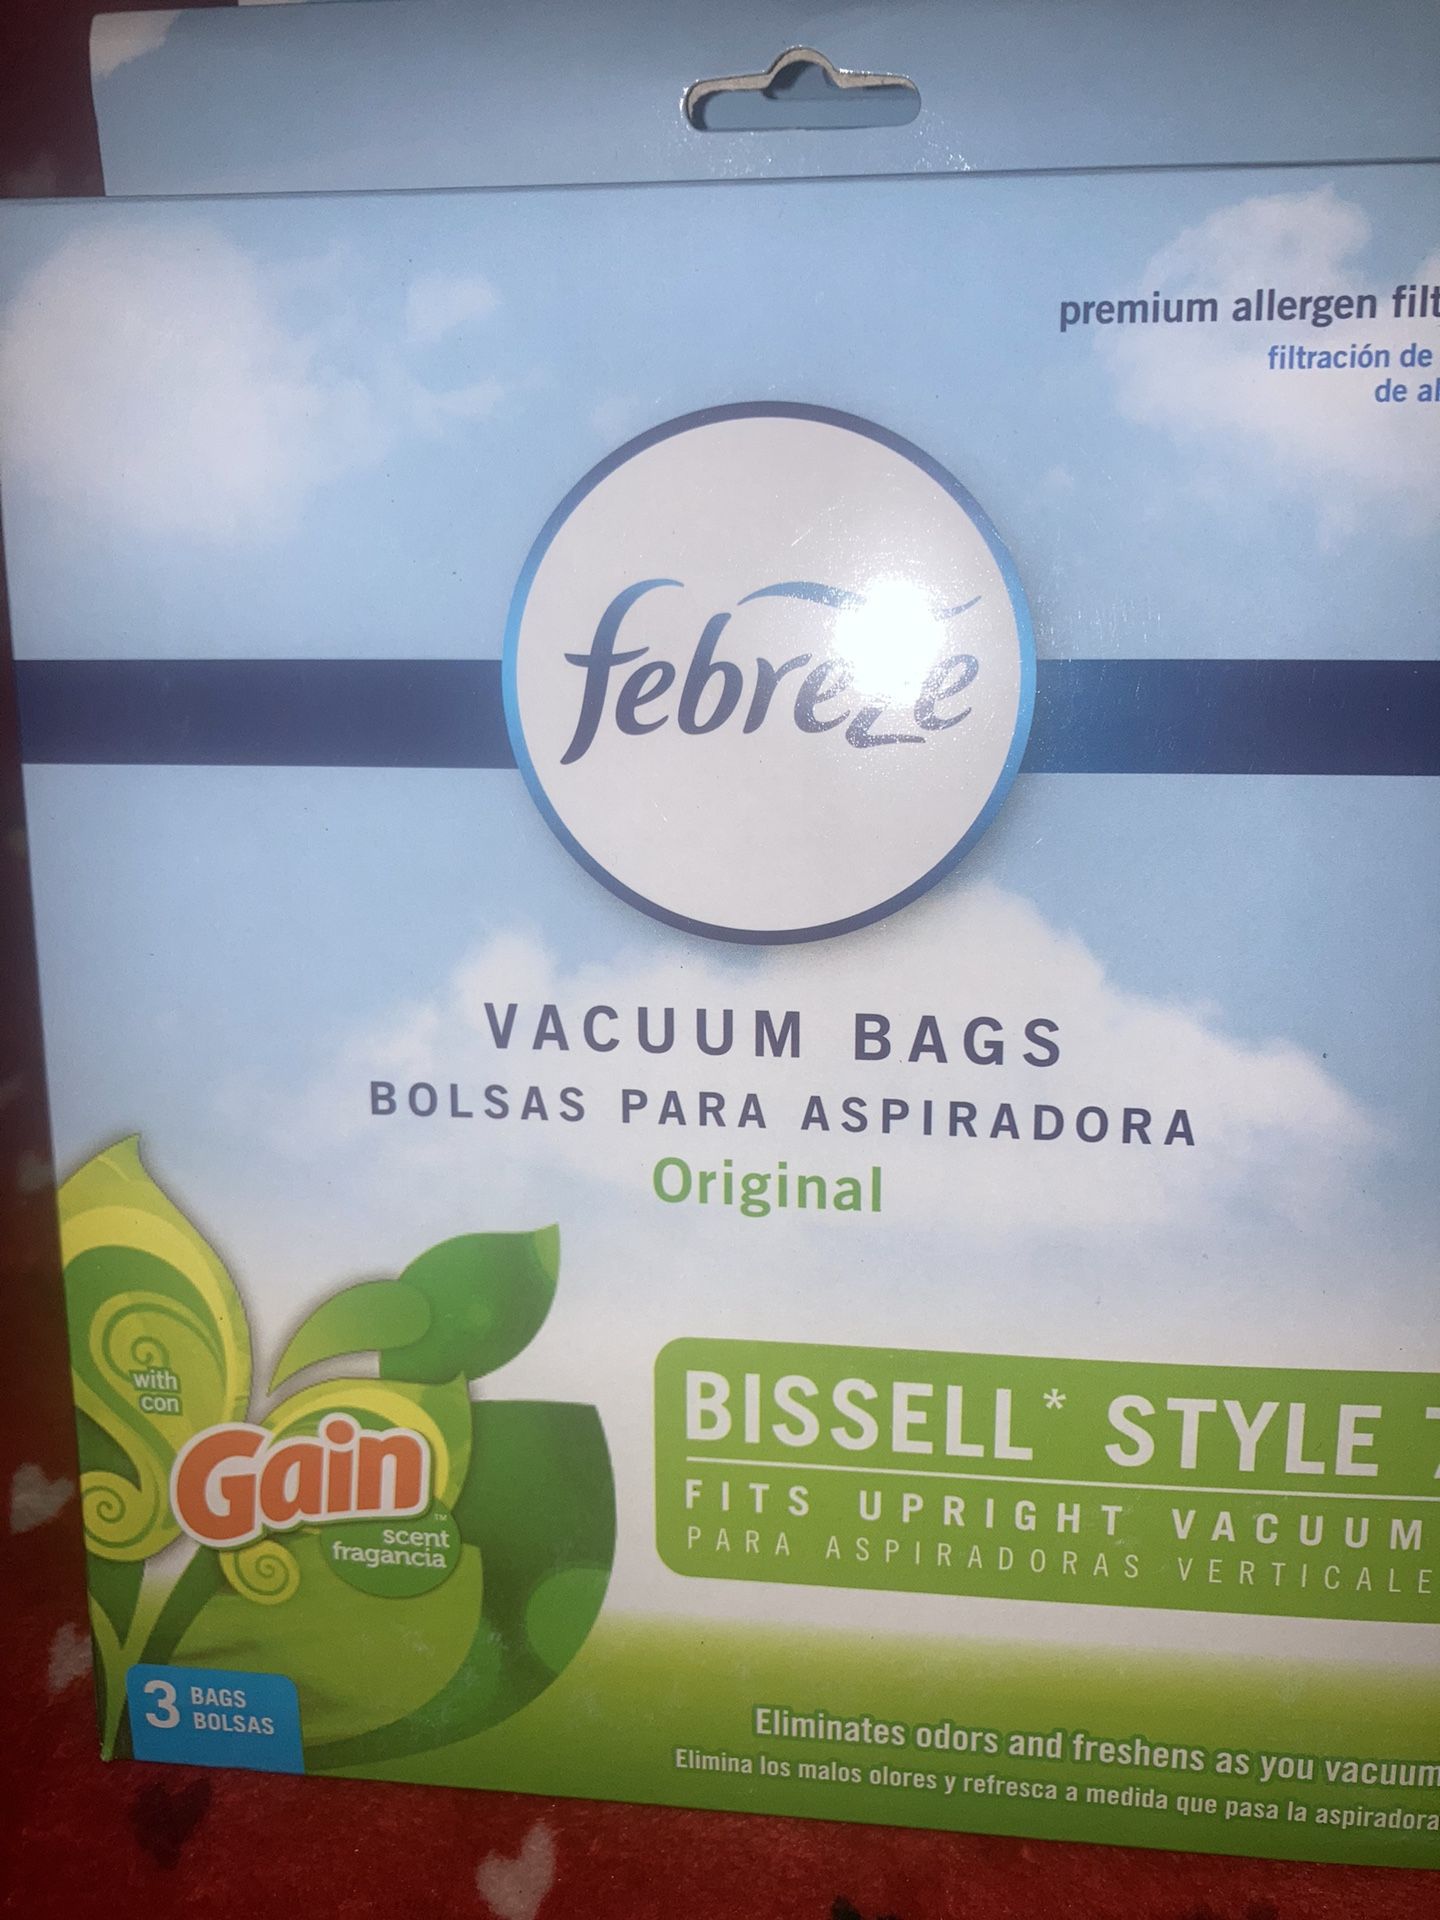 Vacuum Bags